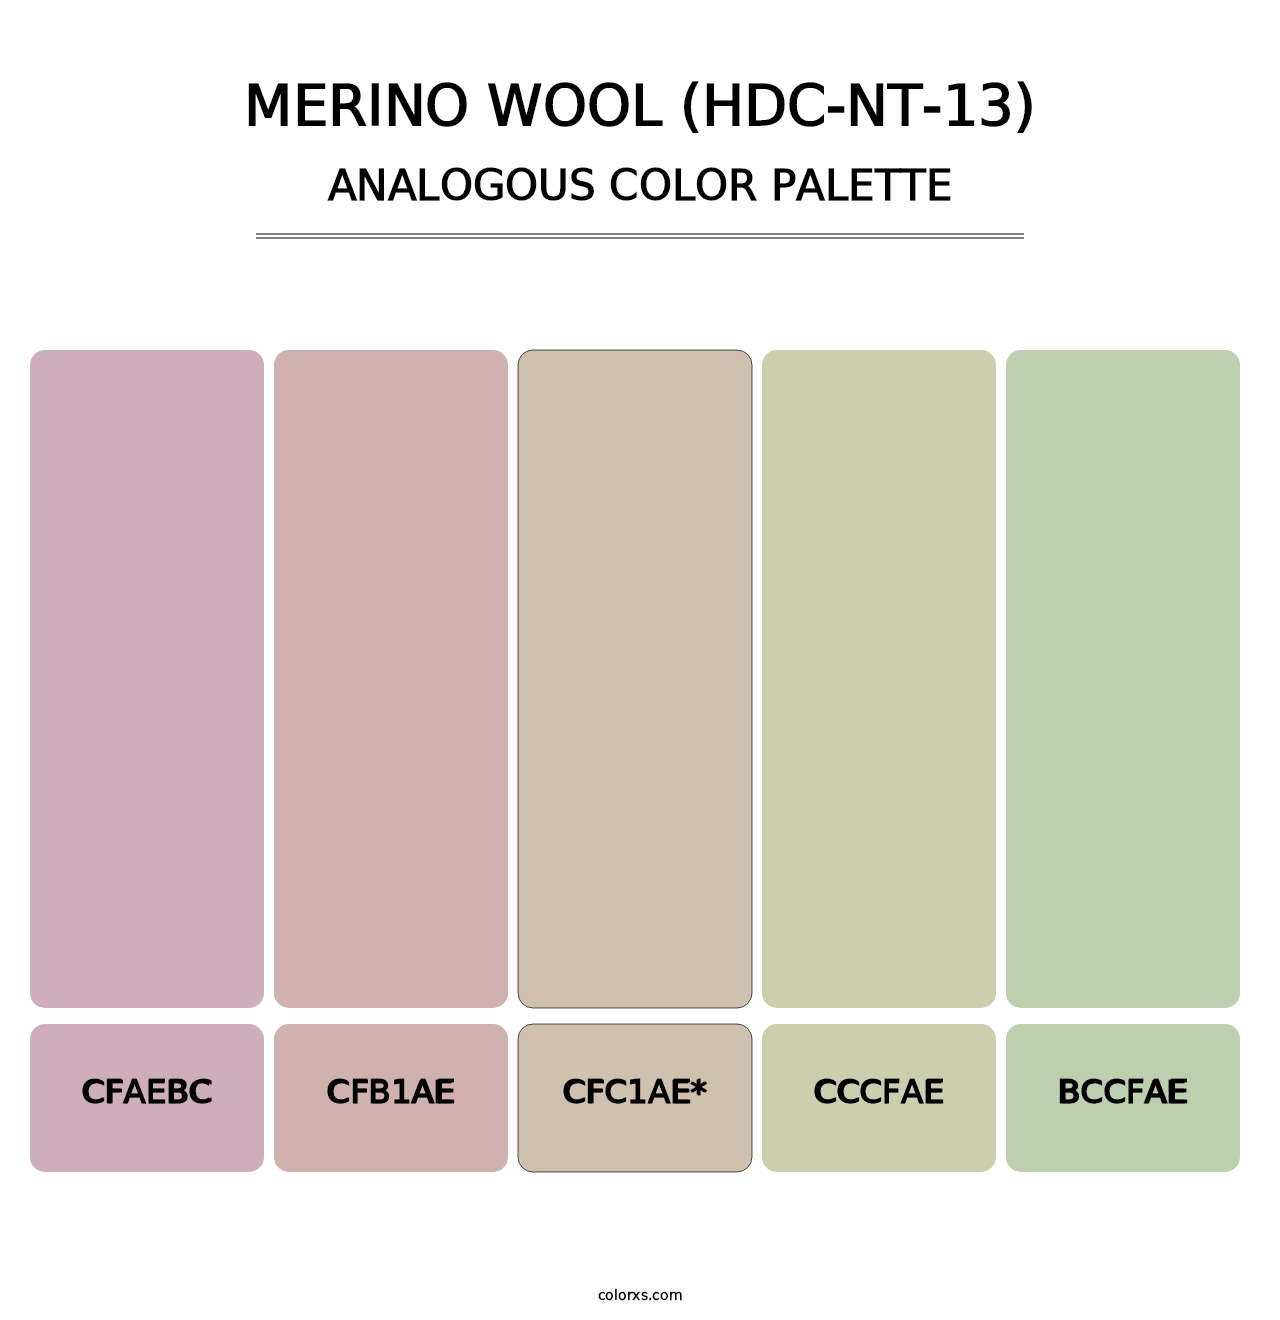 Merino Wool (HDC-NT-13) - Analogous Color Palette